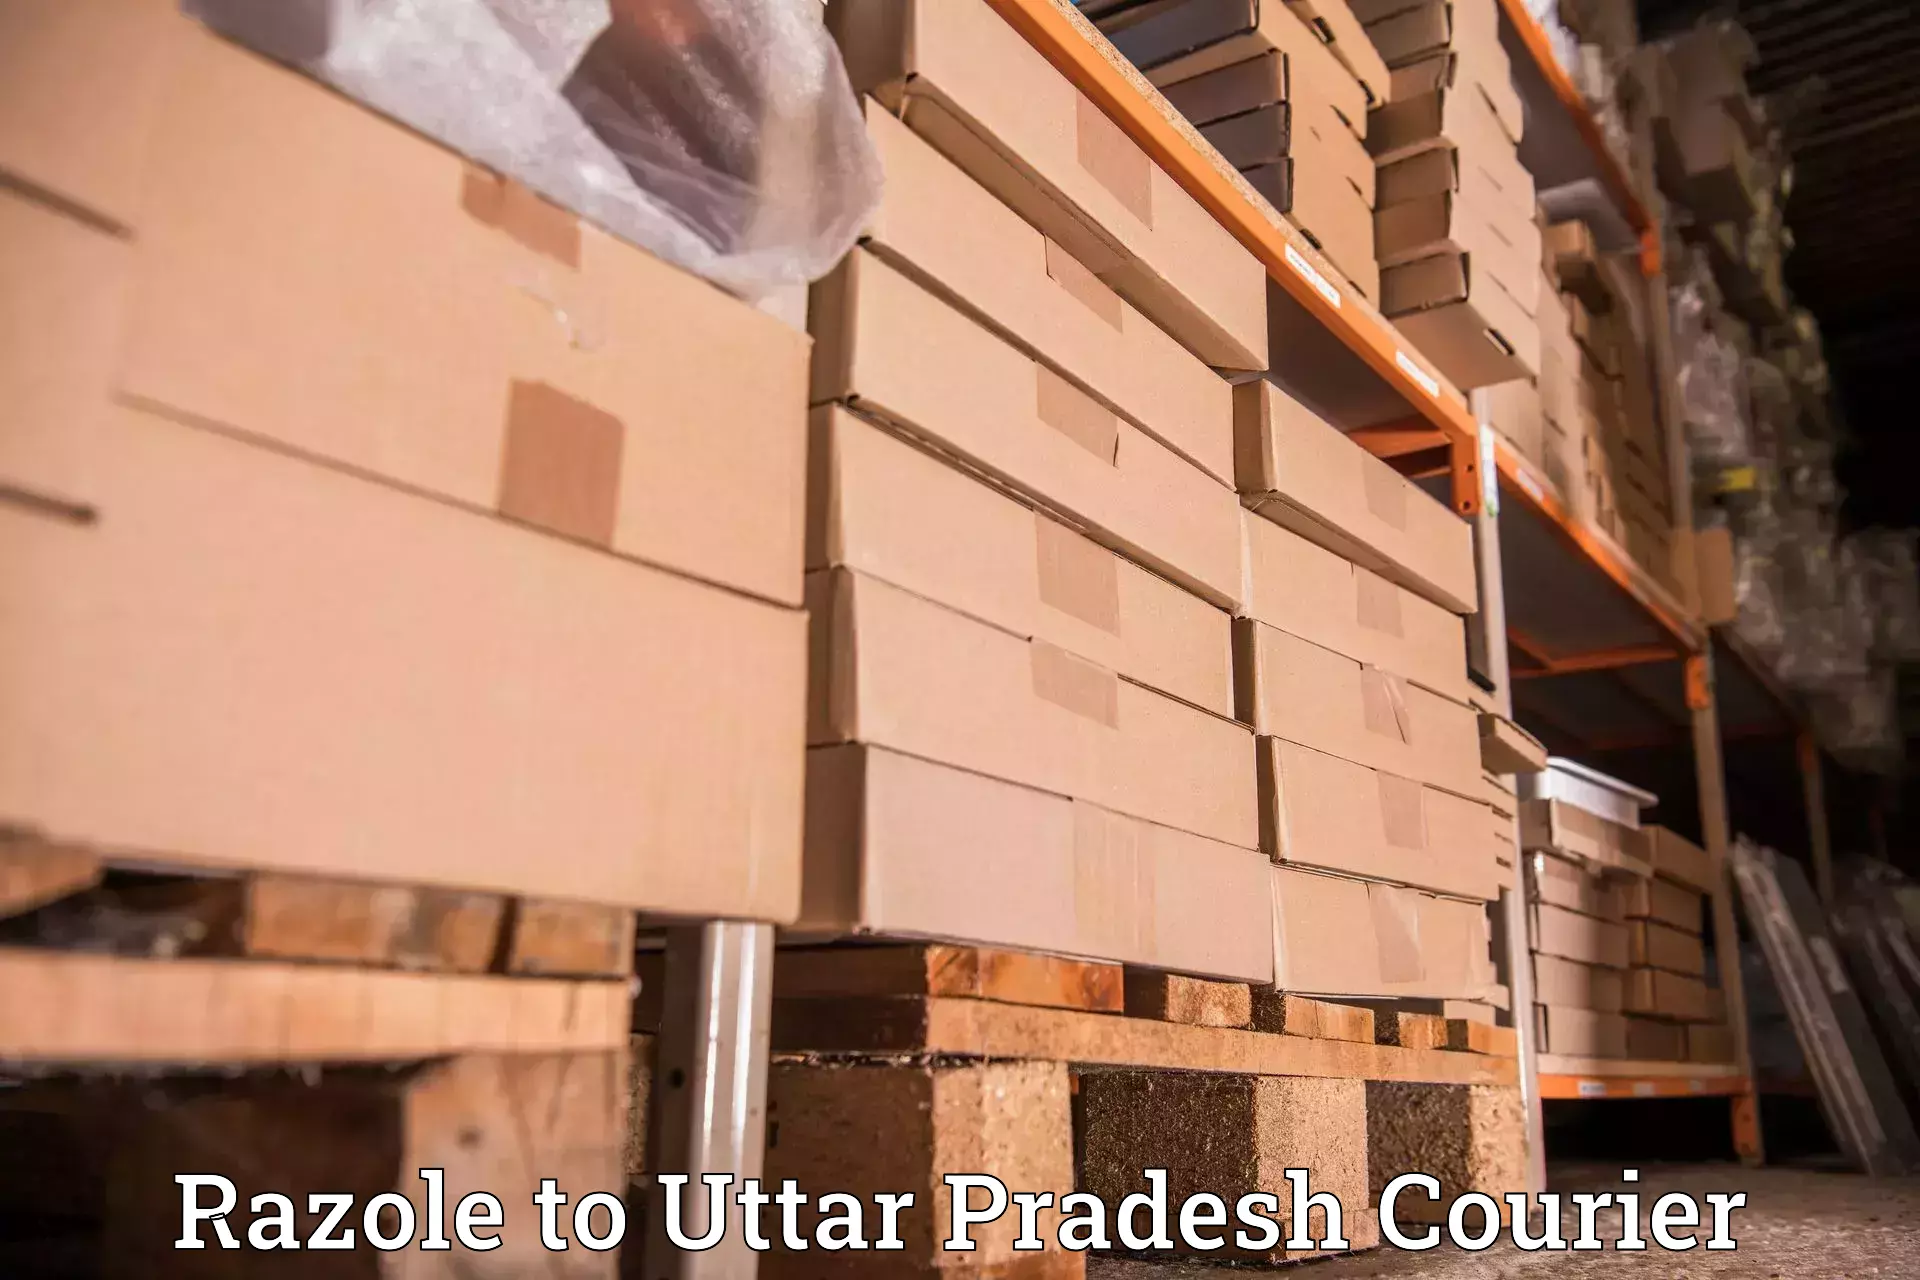 Courier service partnerships Razole to Uttar Pradesh